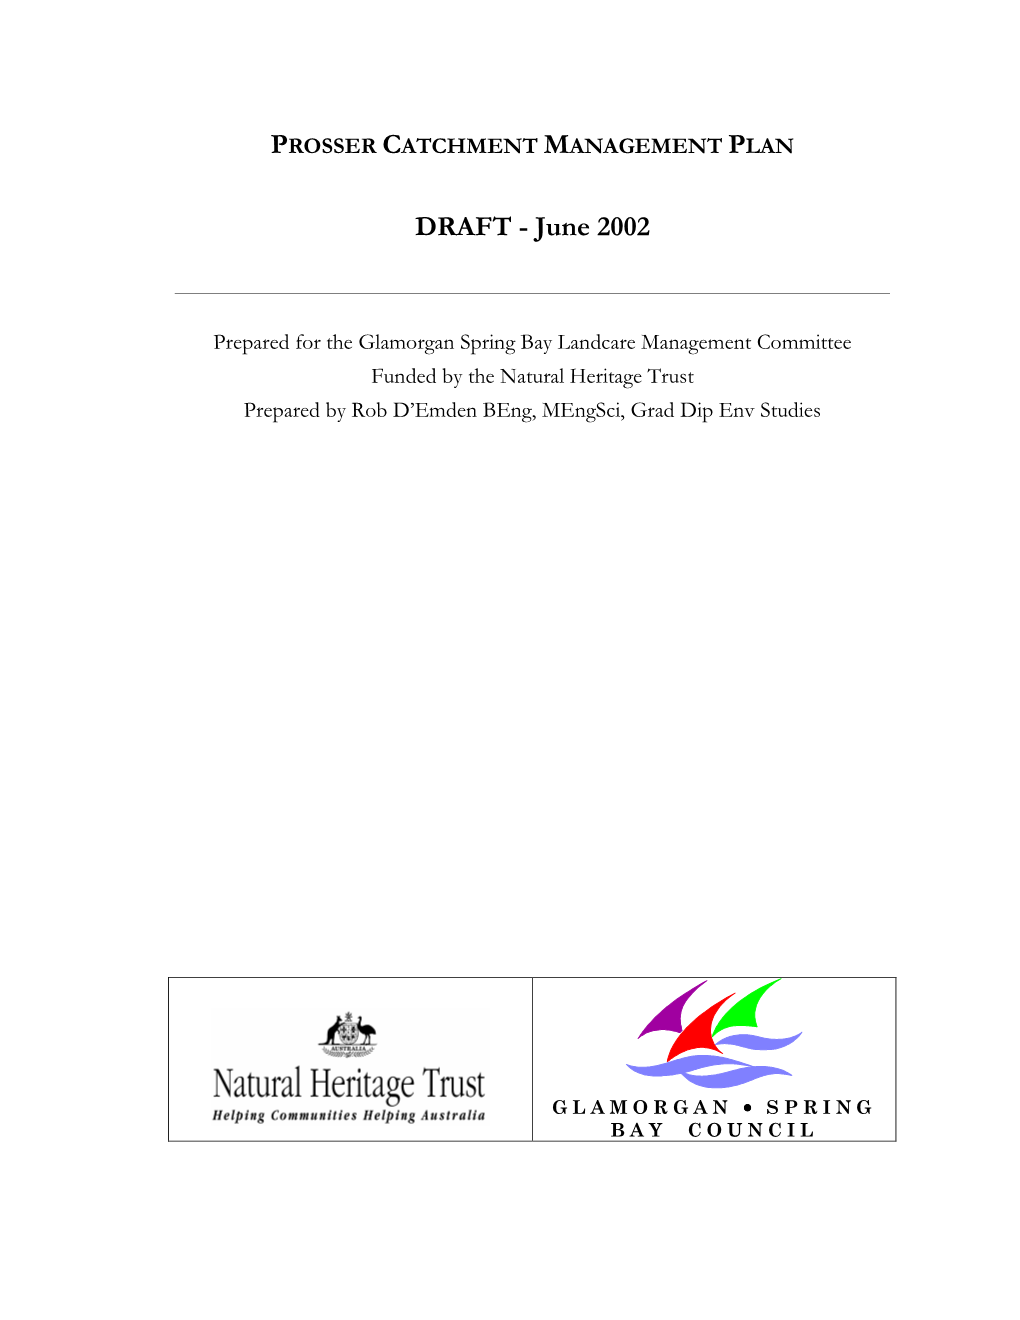 Draft Prosser Catchment Management Plan 2002